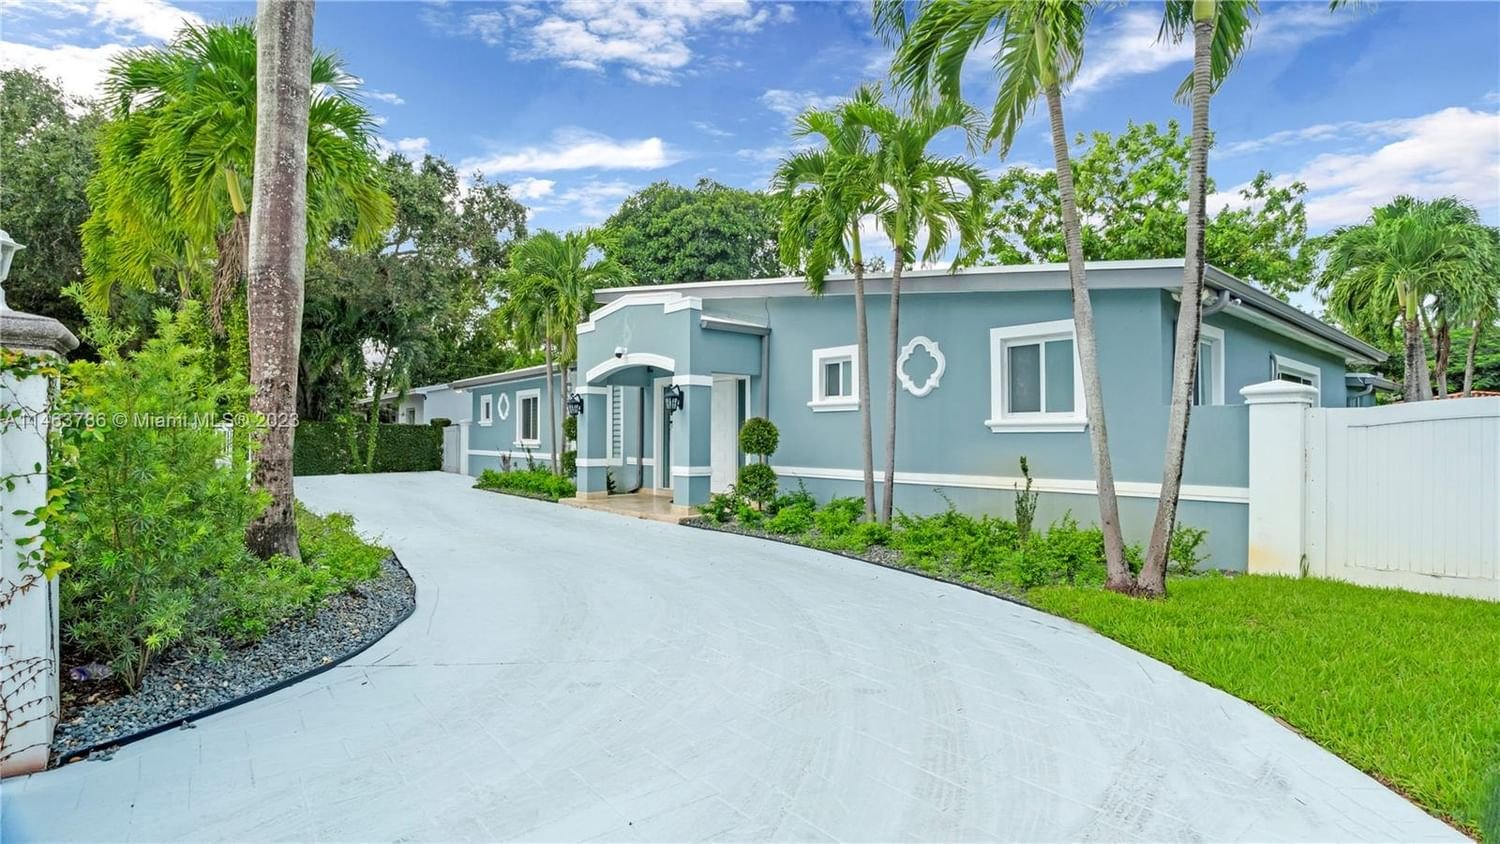 Real estate property located at 5725 56th St, Miami-Dade County, RIVIERA PARK, Miami, FL